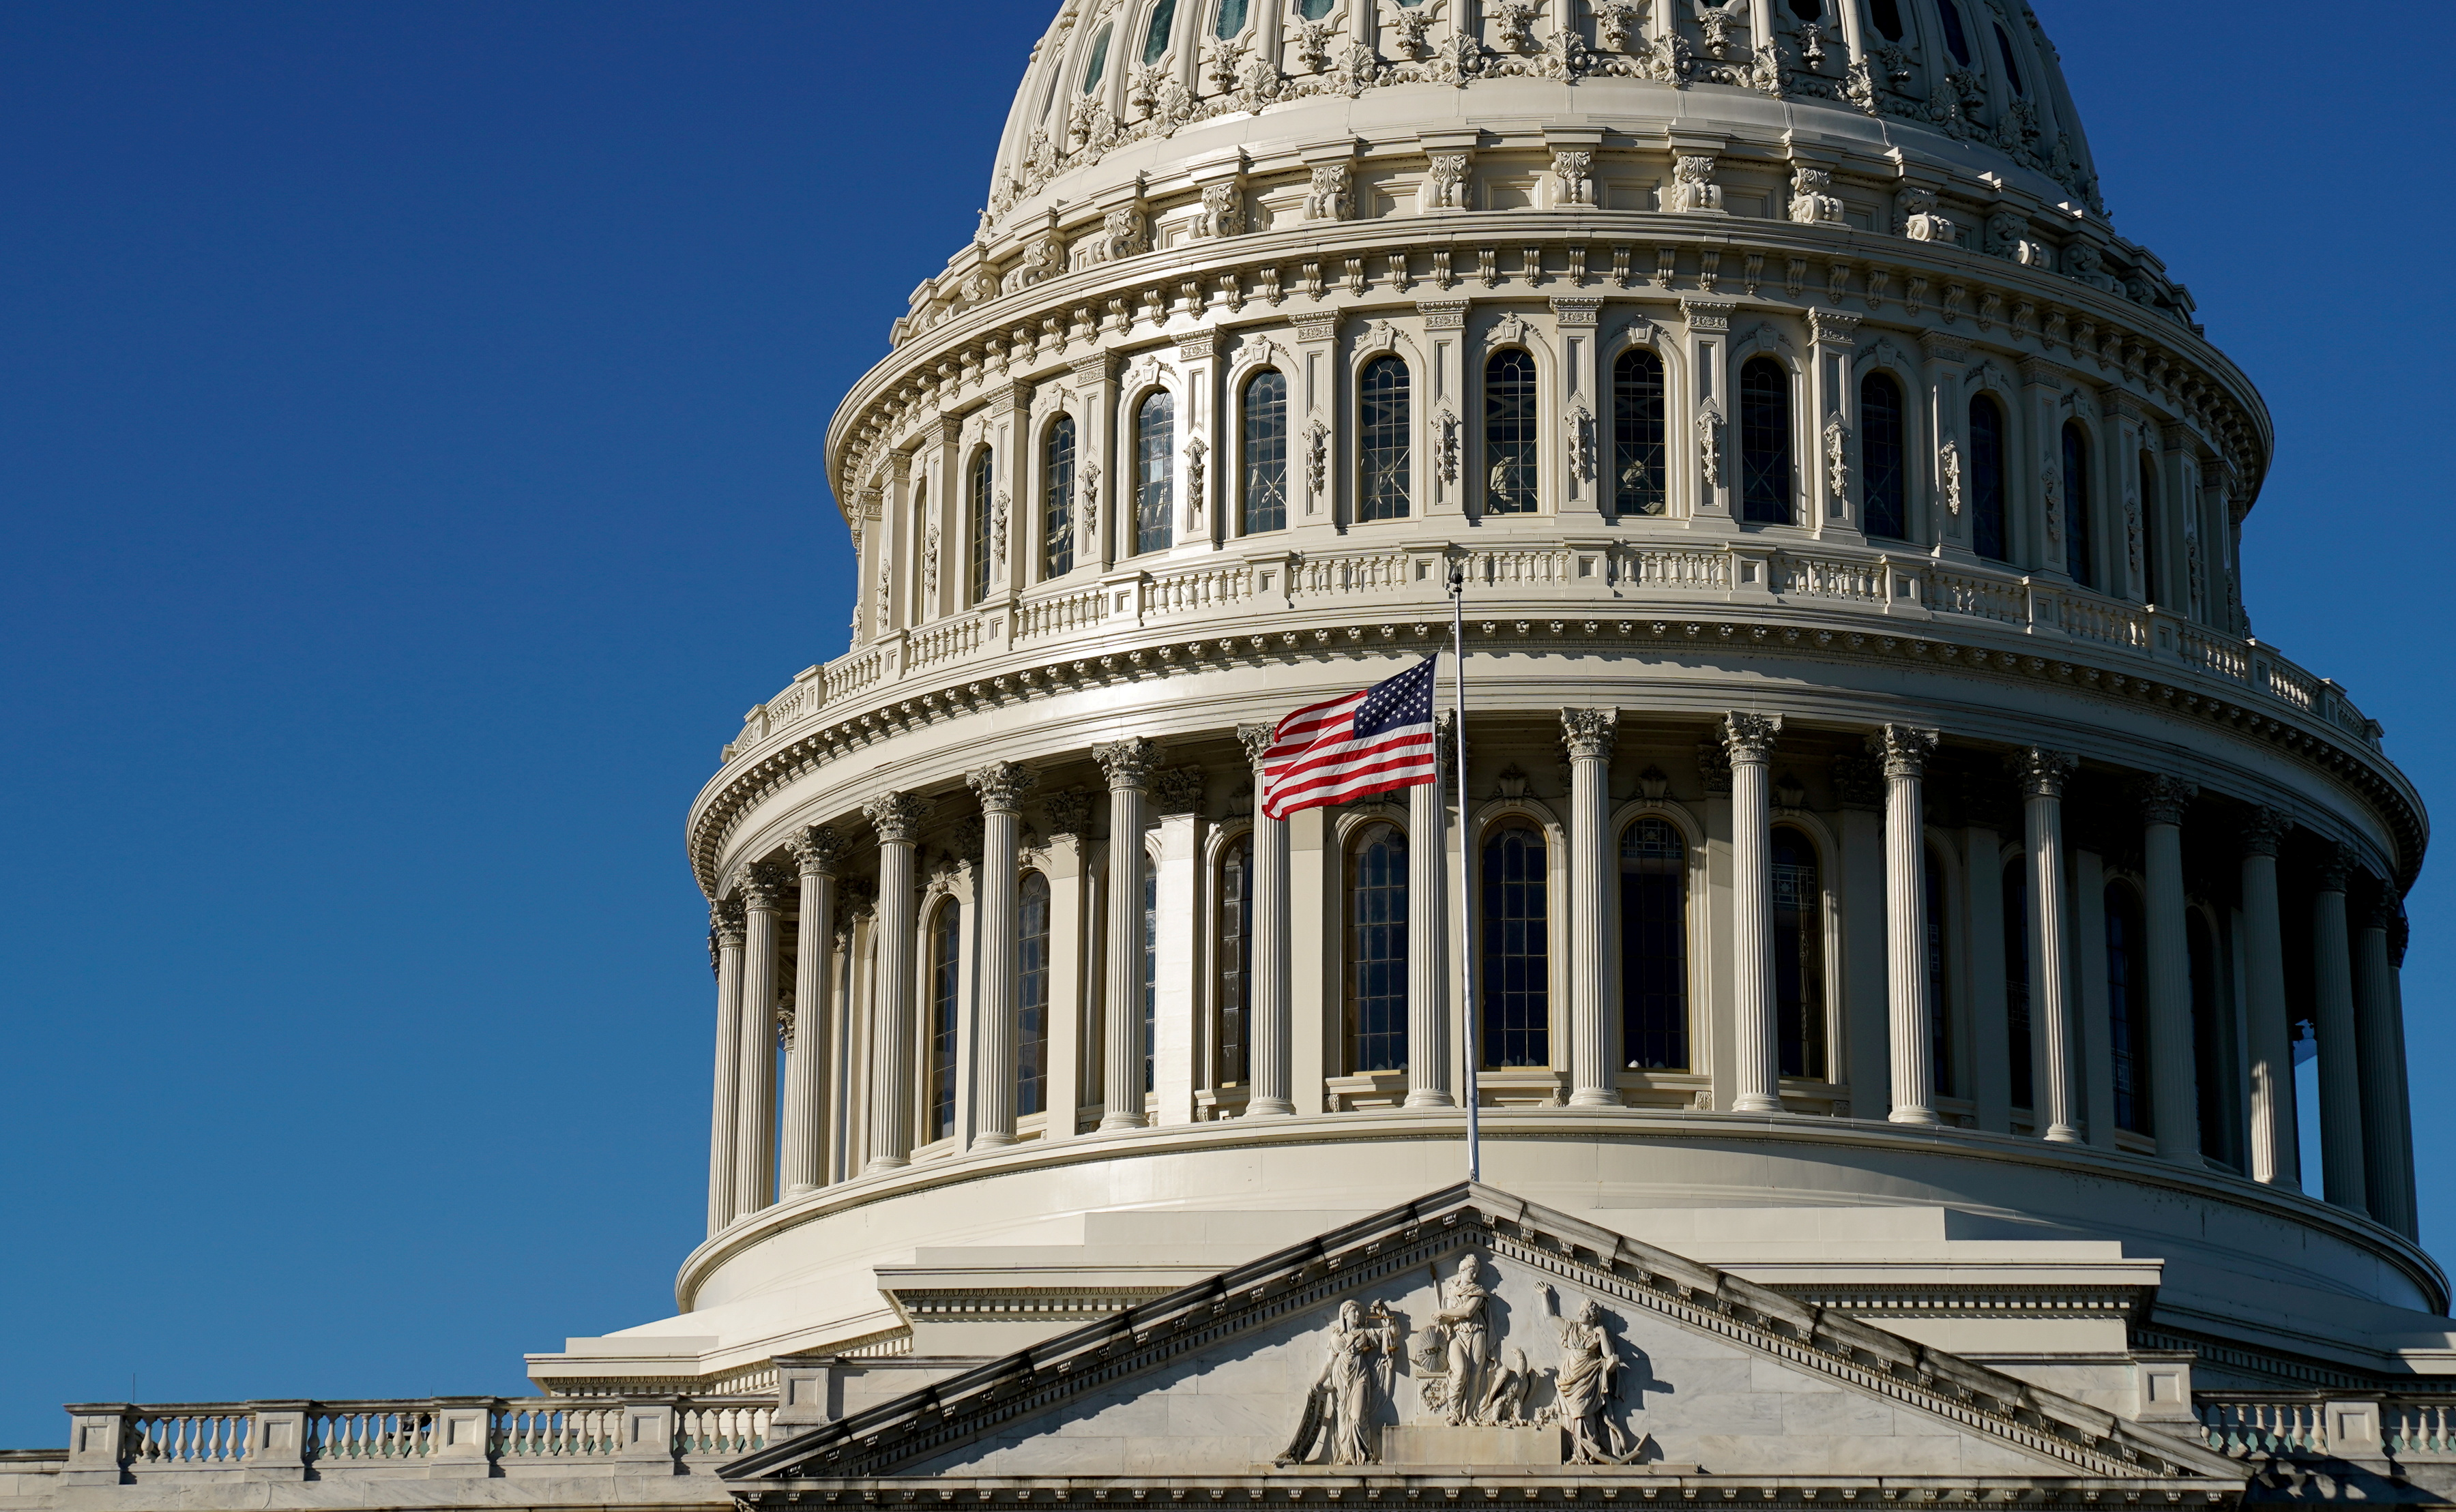 The U.S. Capitol dome is seen in Washington, U.S., December 17, 2020. REUTERS/Erin Scott